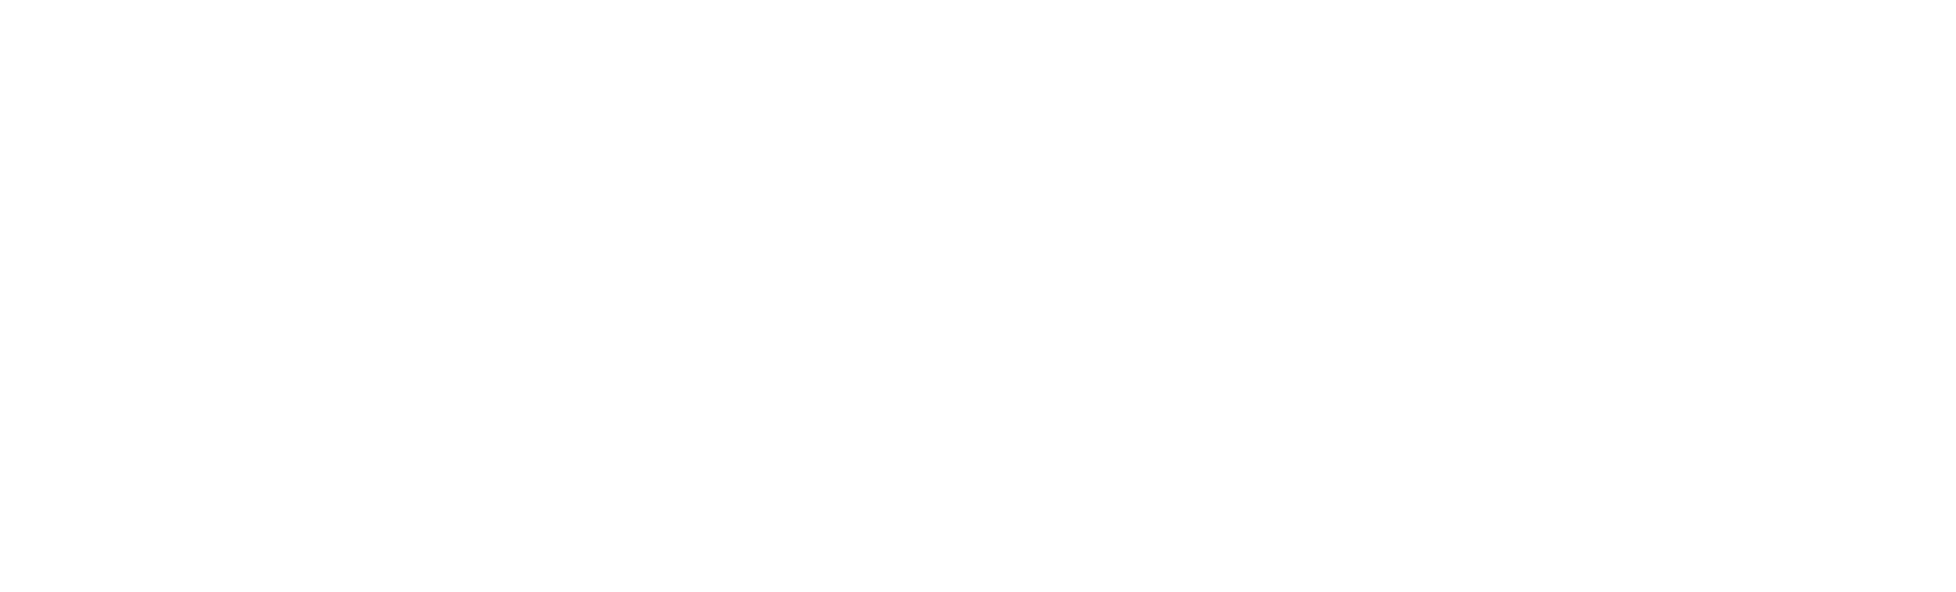 Final Fantasy VII Rebirth Deluxe Edition - PS5